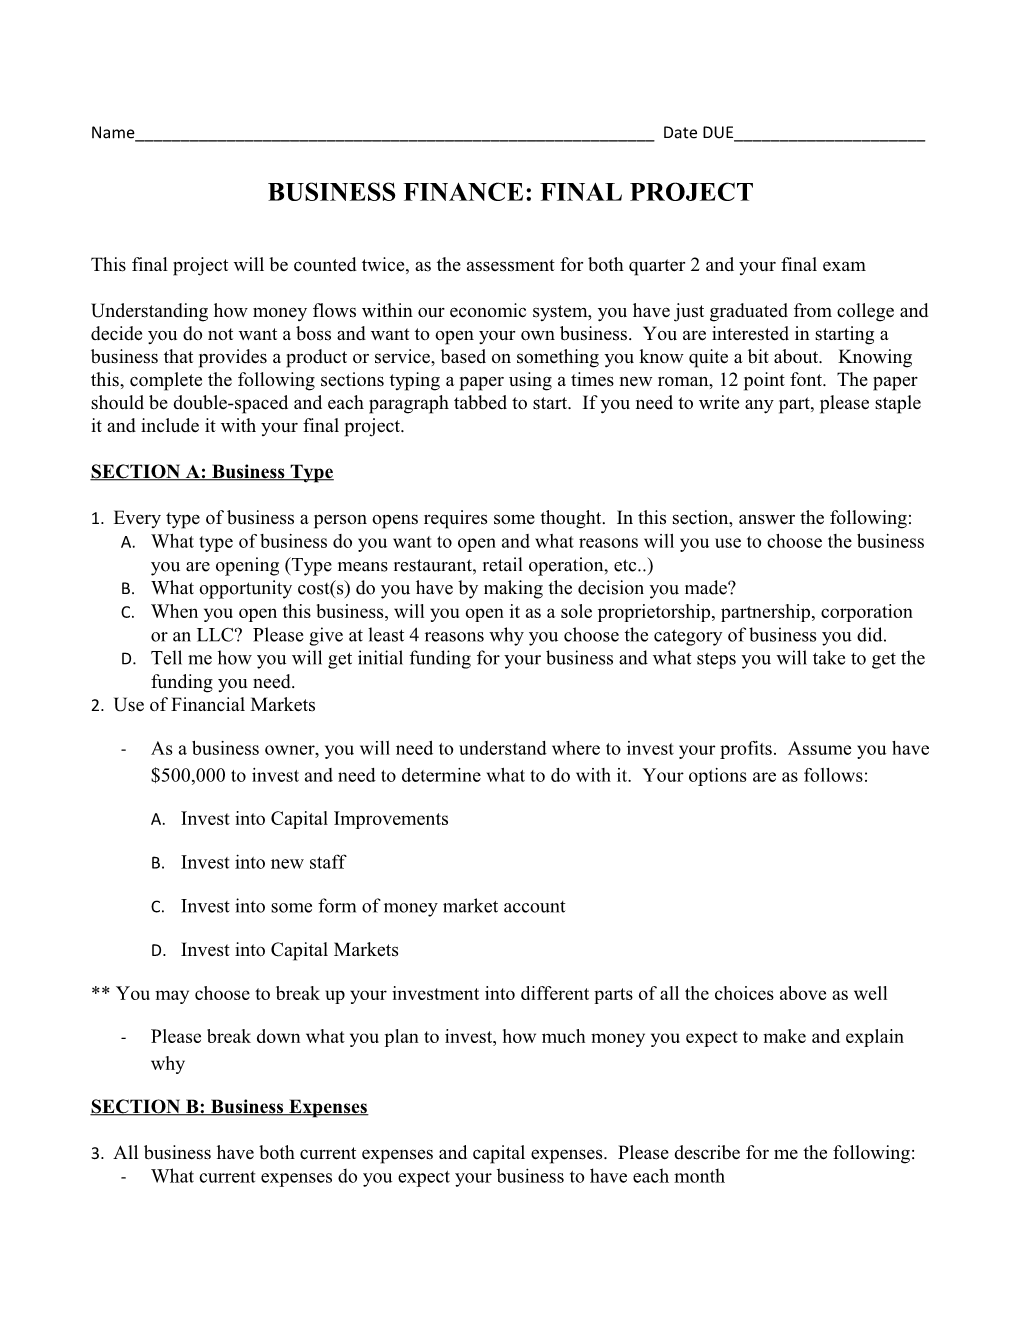 Business Finance: Final Project